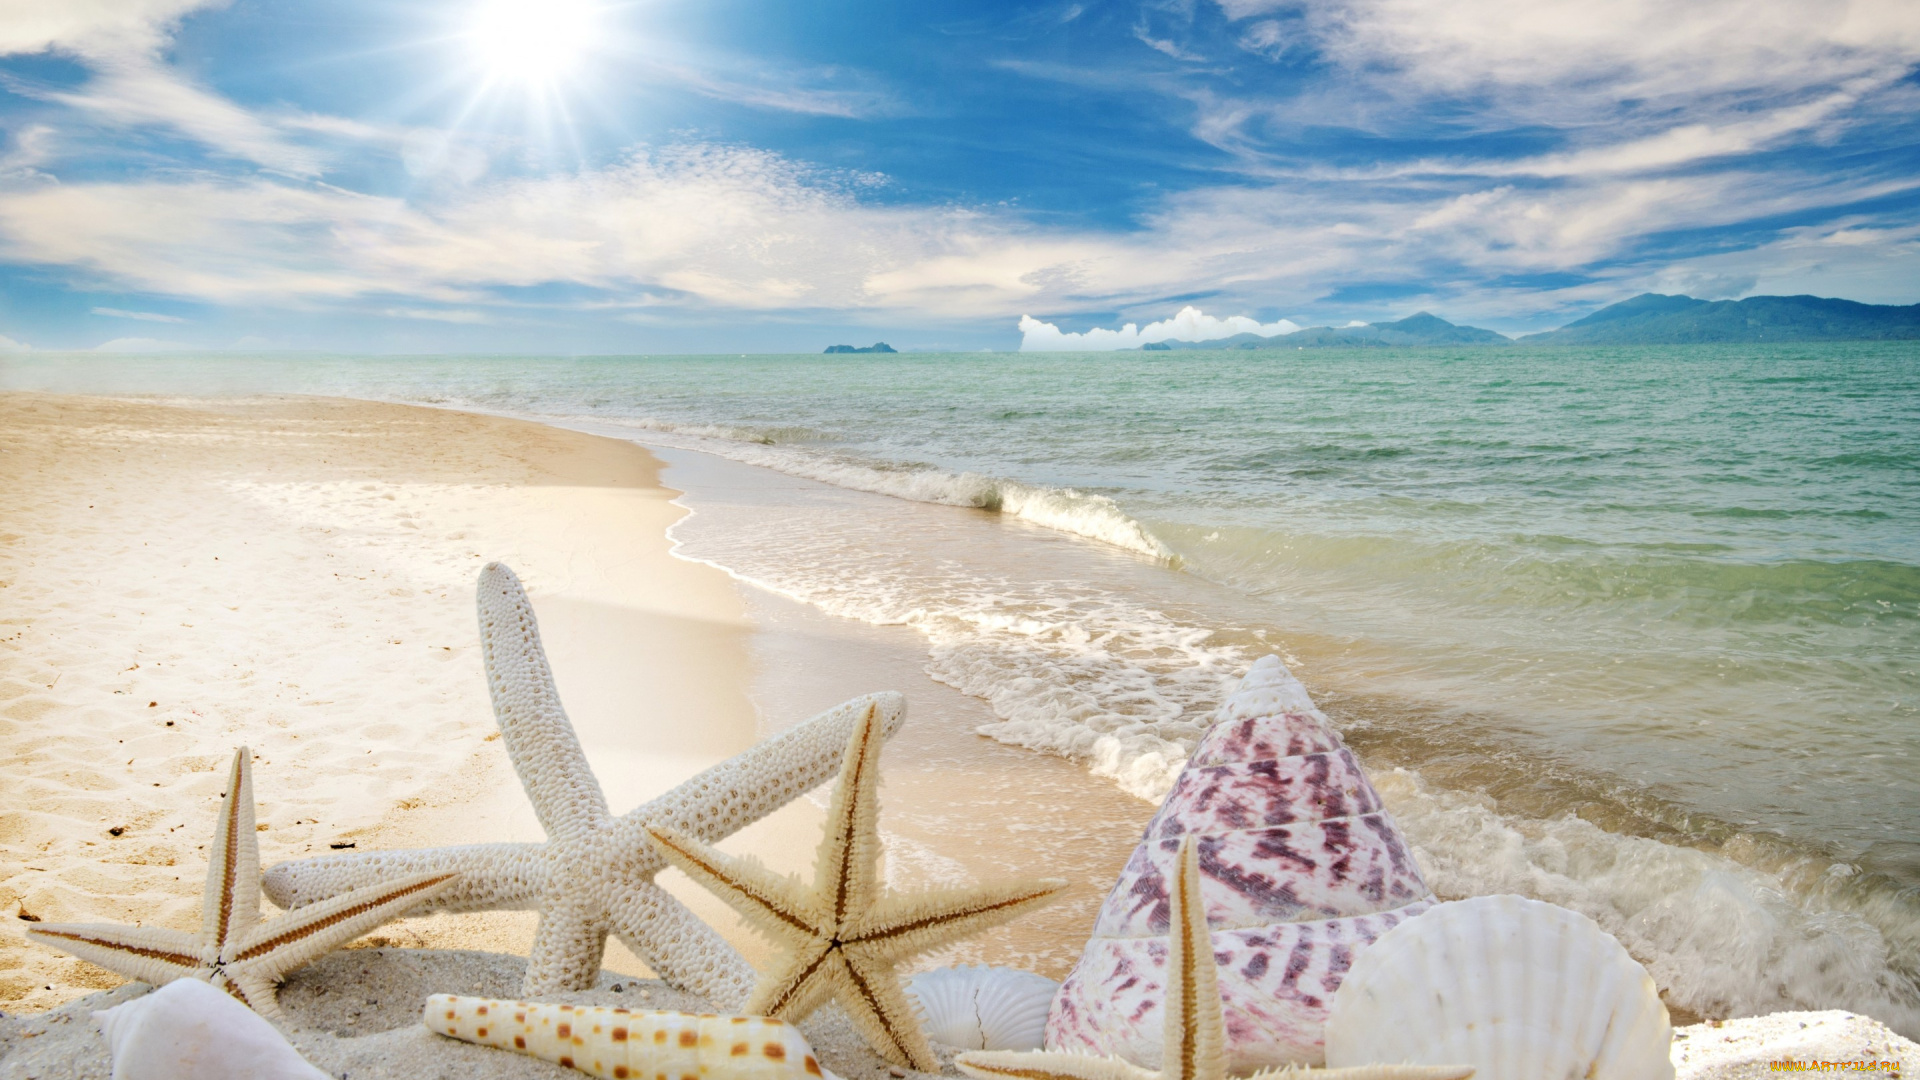 разное, ракушки, , кораллы, , декоративные, и, spa-камни, песок, солнце, beach, starfishes, seashells, море, пляж, звезды, sky, sand, summer, sunshine, sea